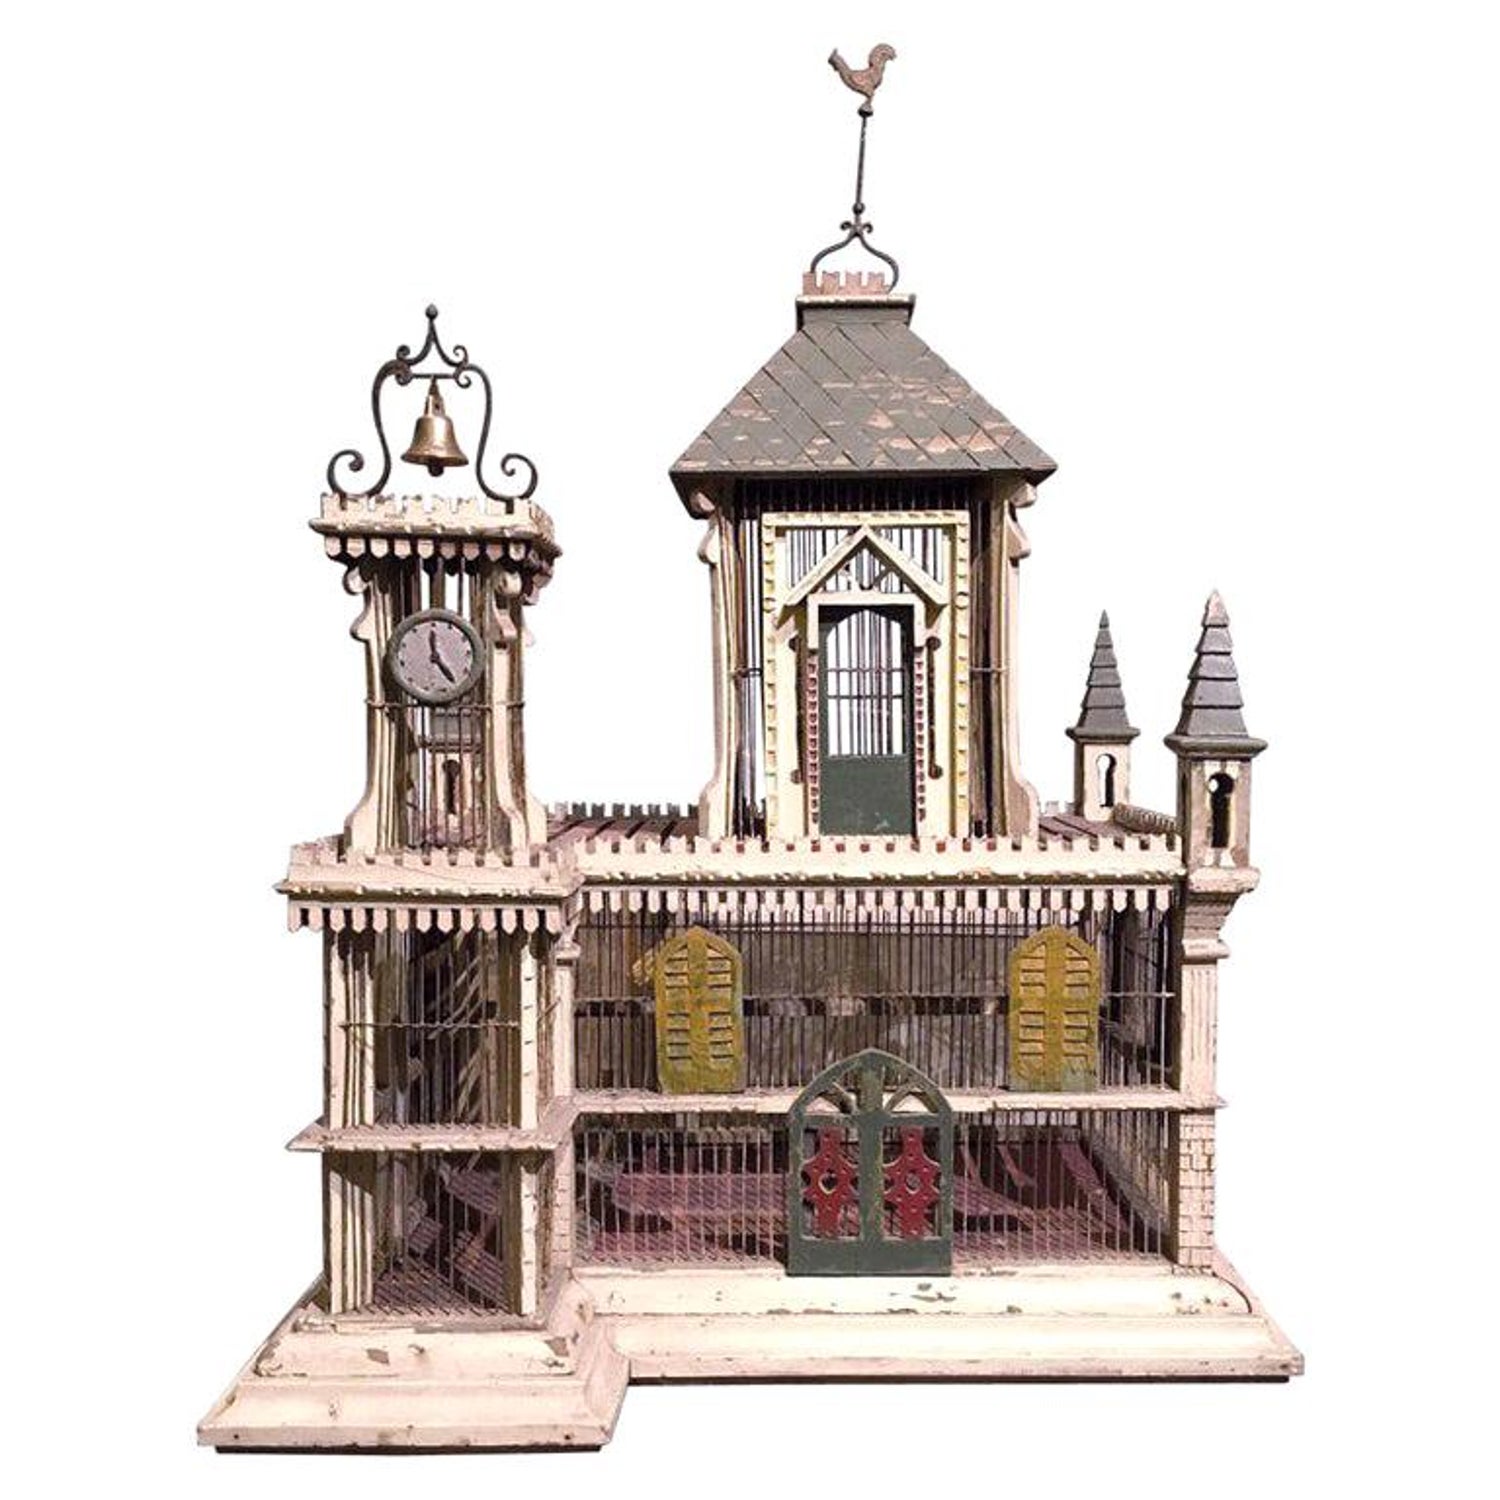 Birdcage Castle - 3 For Sale on 1stDibs | bird cage castle, castle bird cage